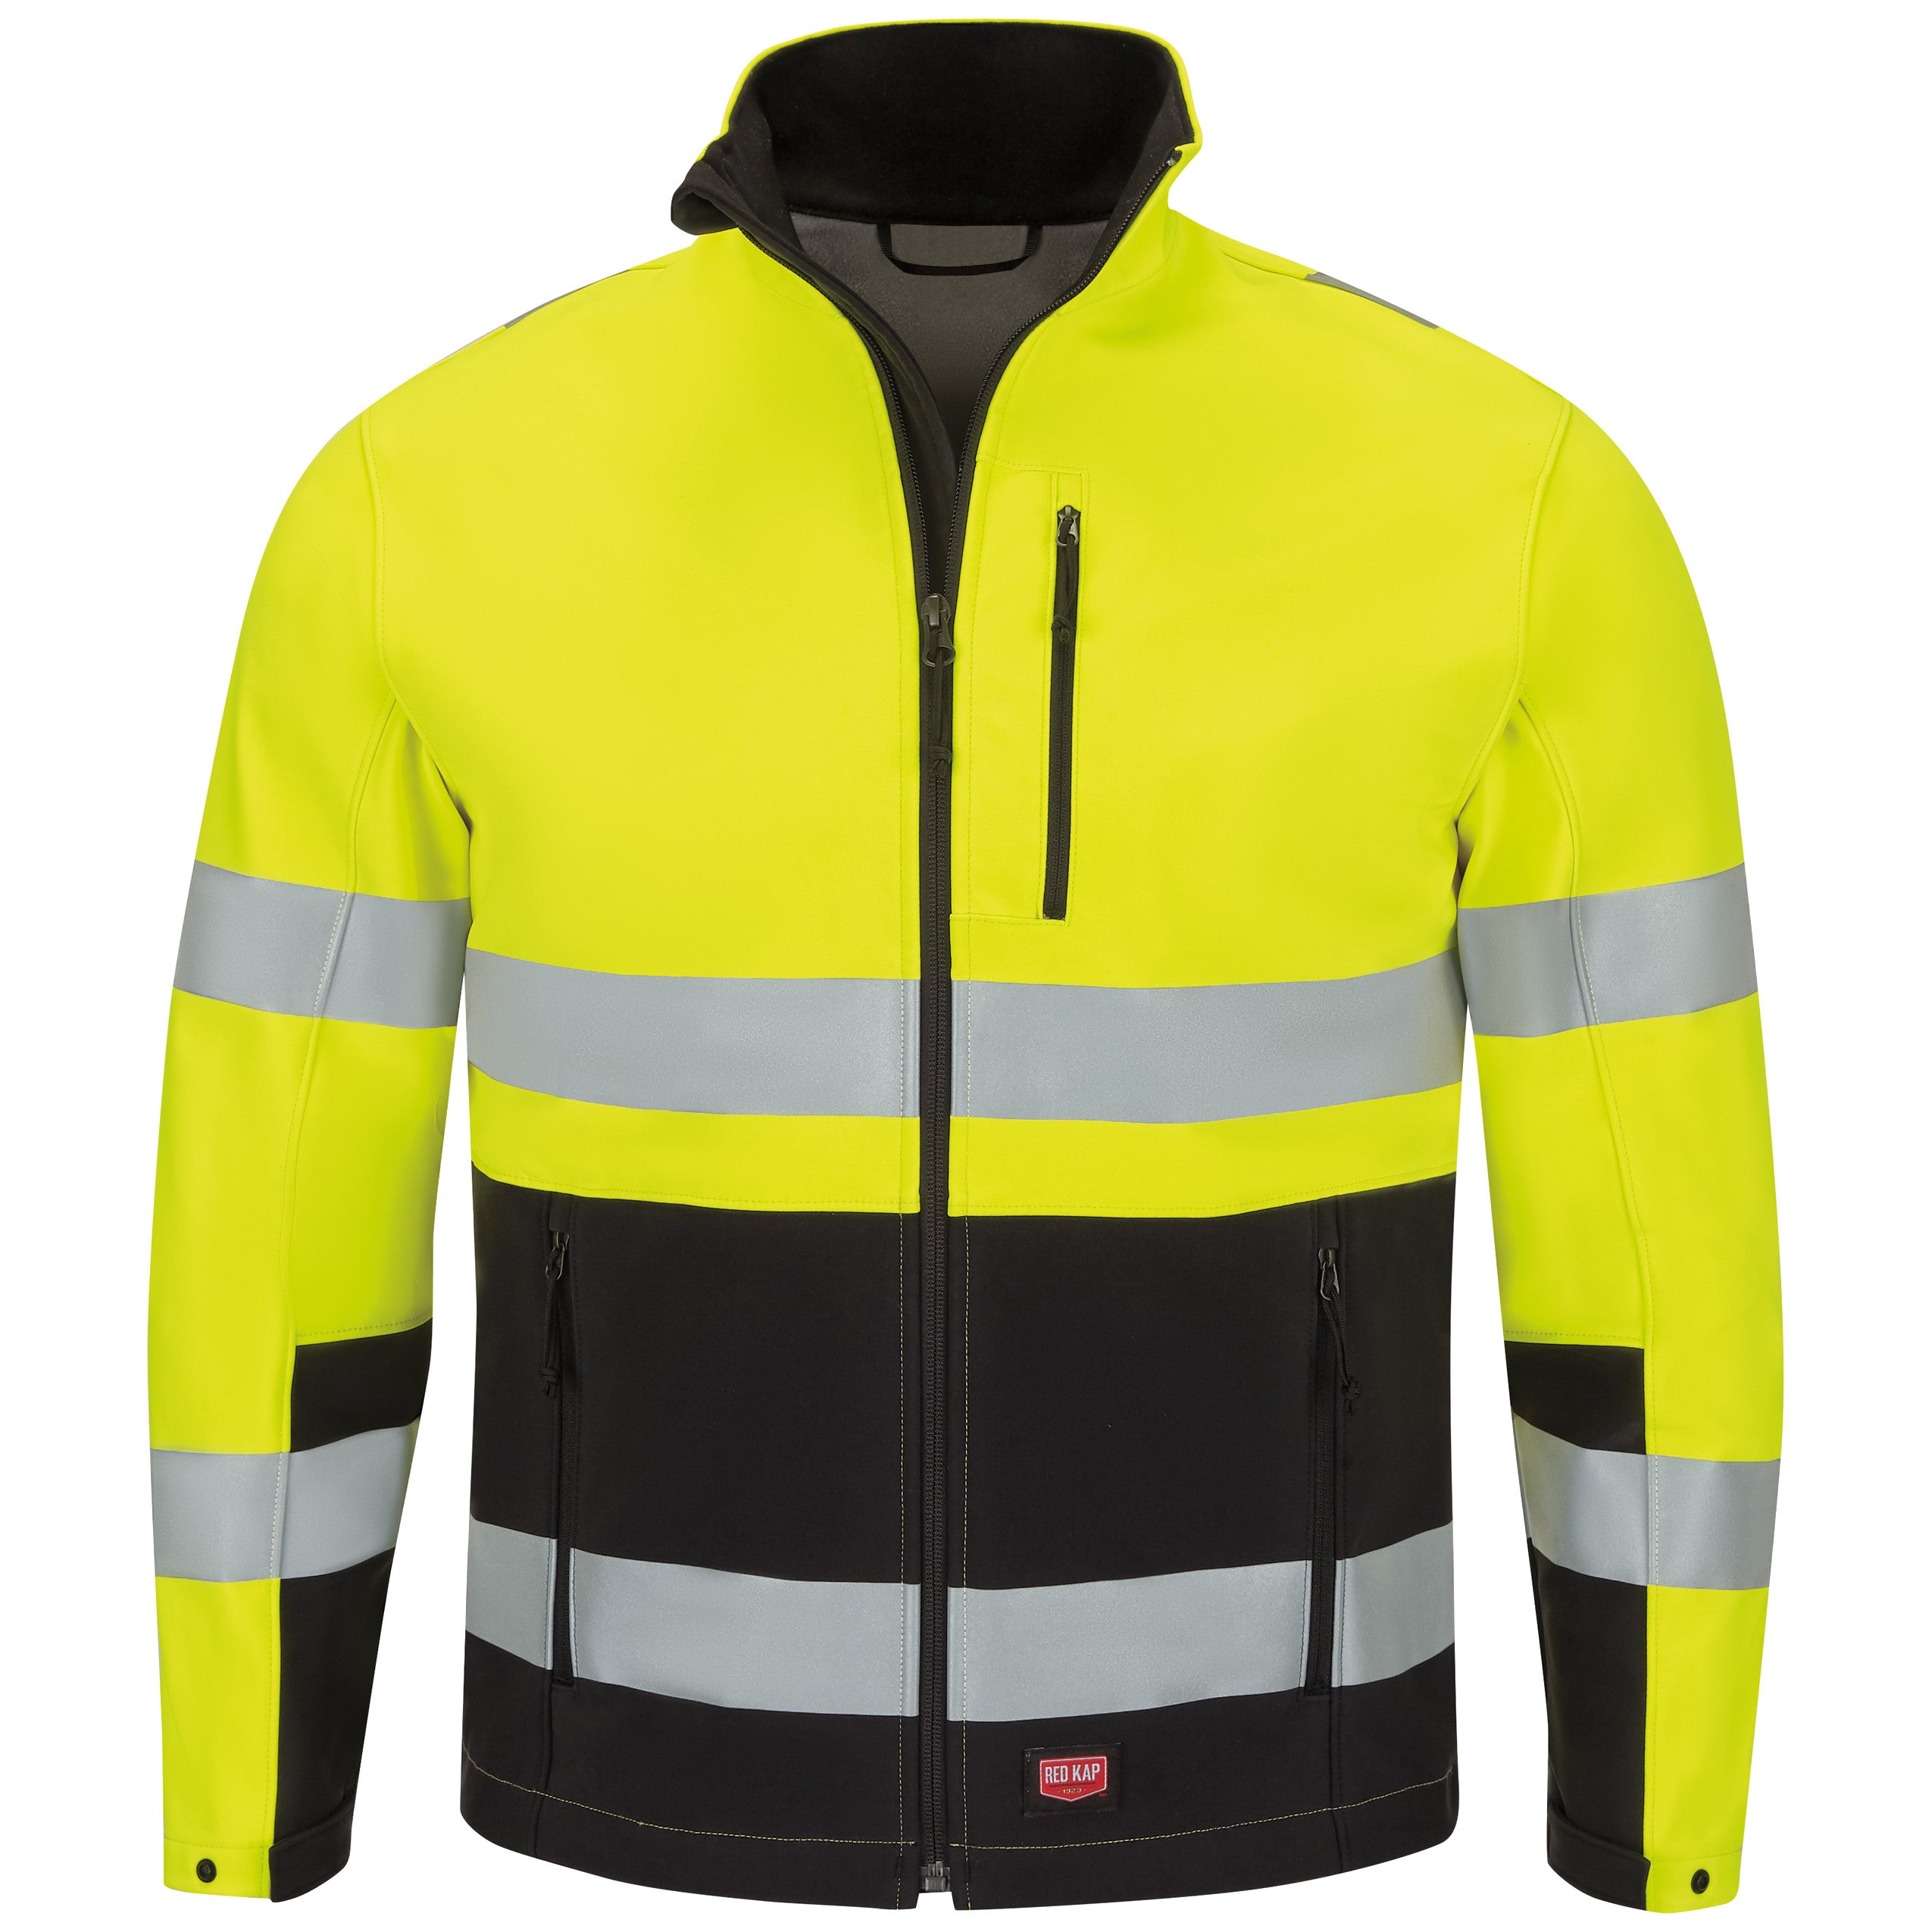 Men's Hi-Visibility Soft Shell Jacket JY34 - Fluorescent Yellow/Black-eSafety Supplies, Inc